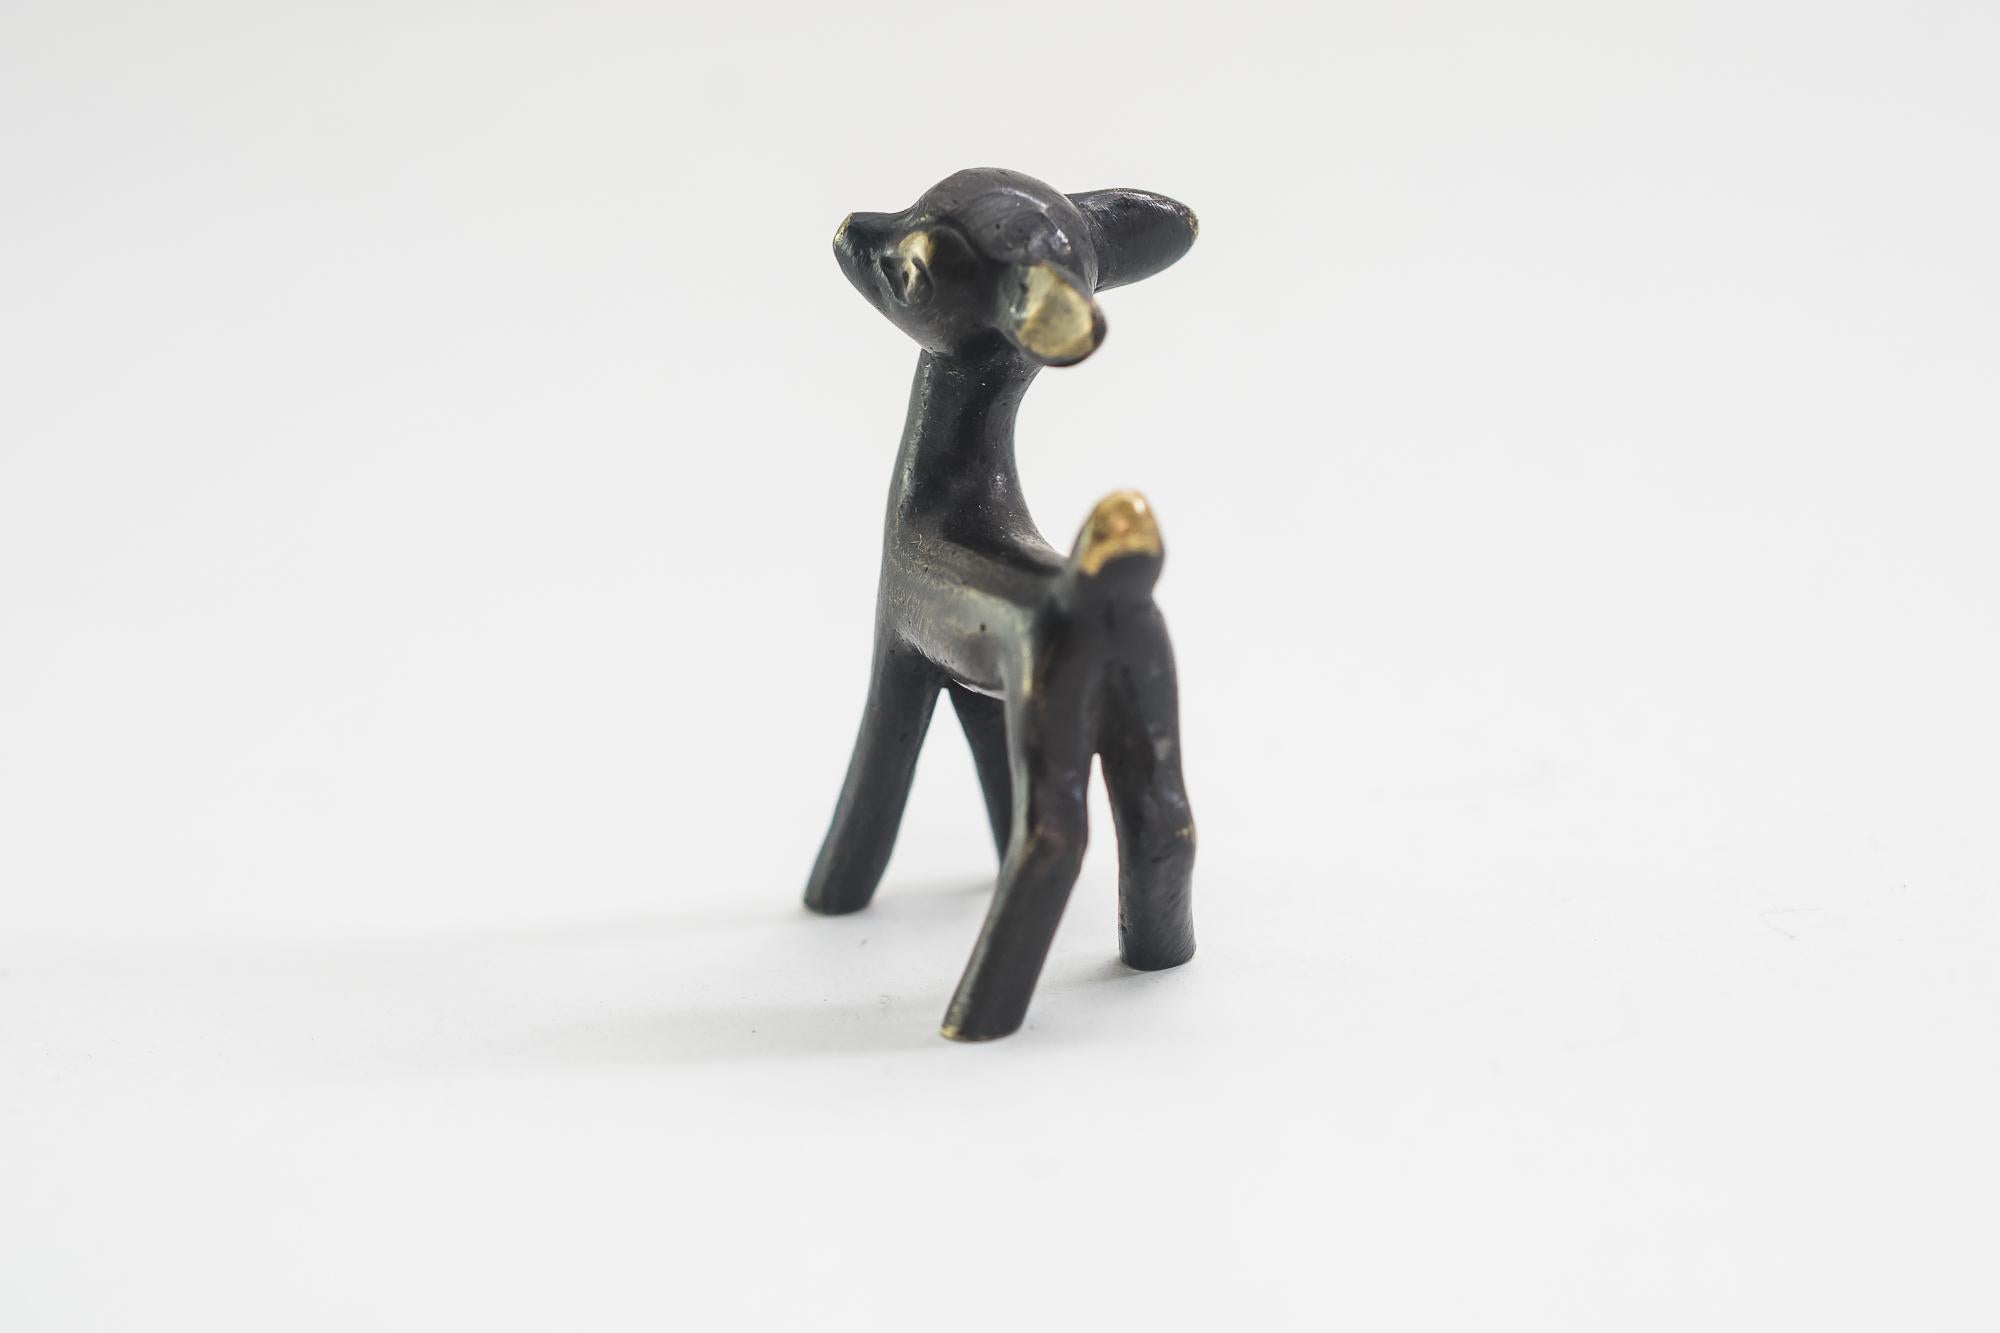 Deer figurine by Walter Bosse, Vienna, circa 1950s
Original condition.